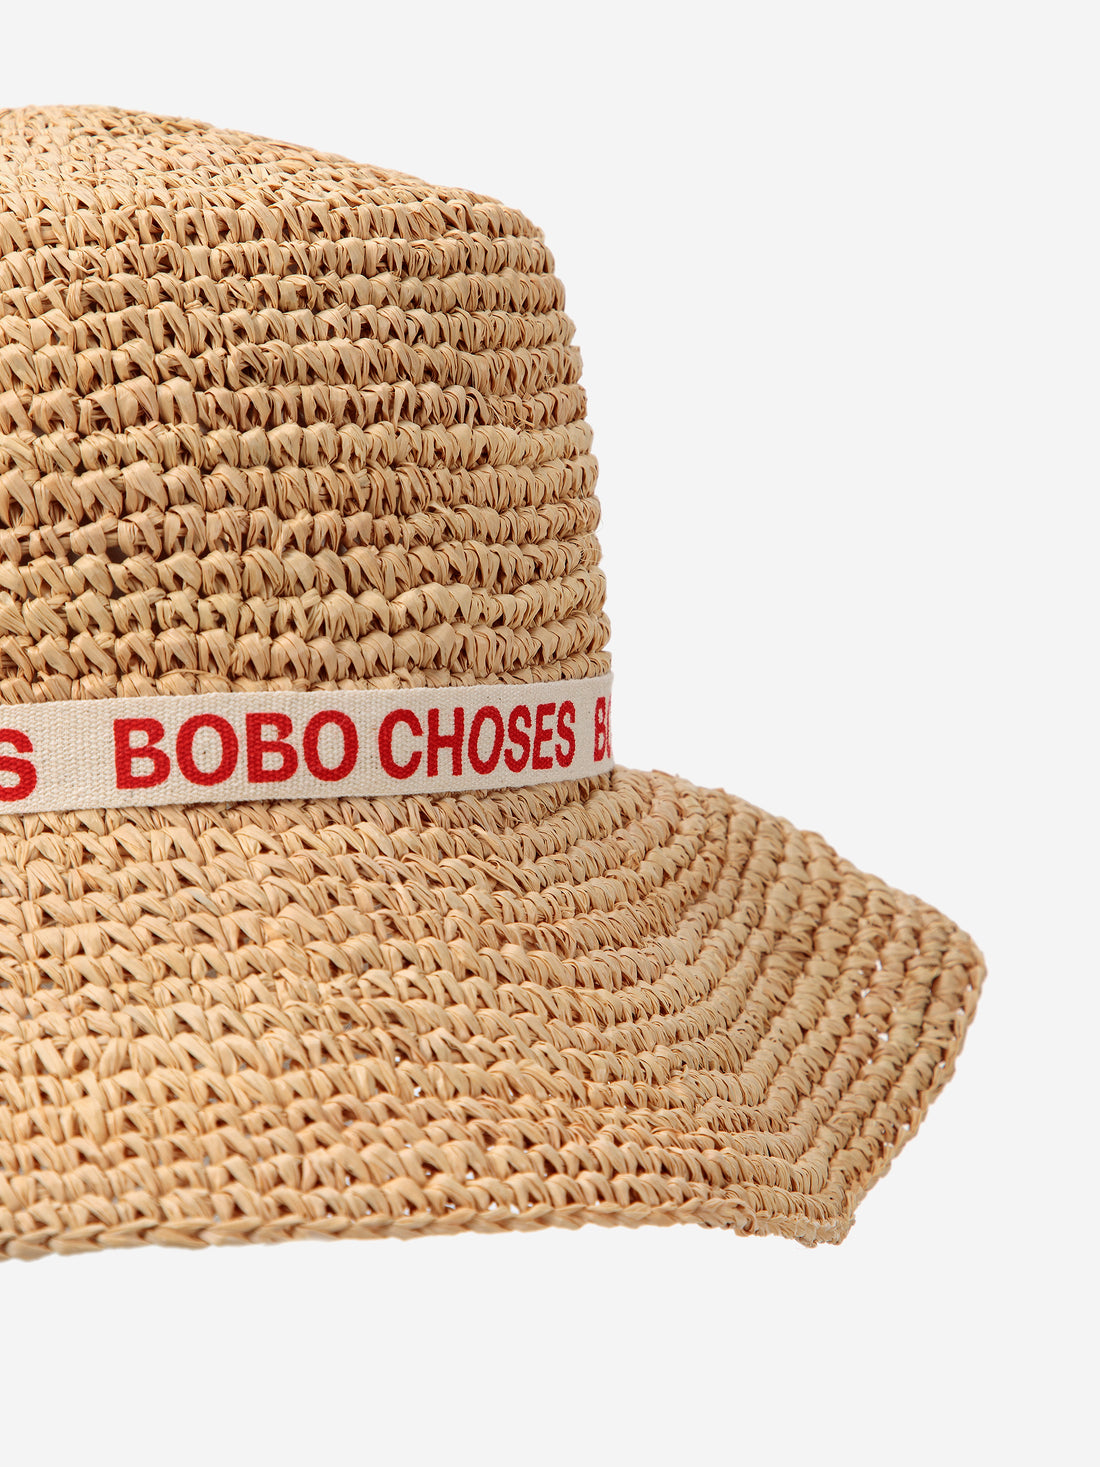 Bobo choisit un chapeau en raphia